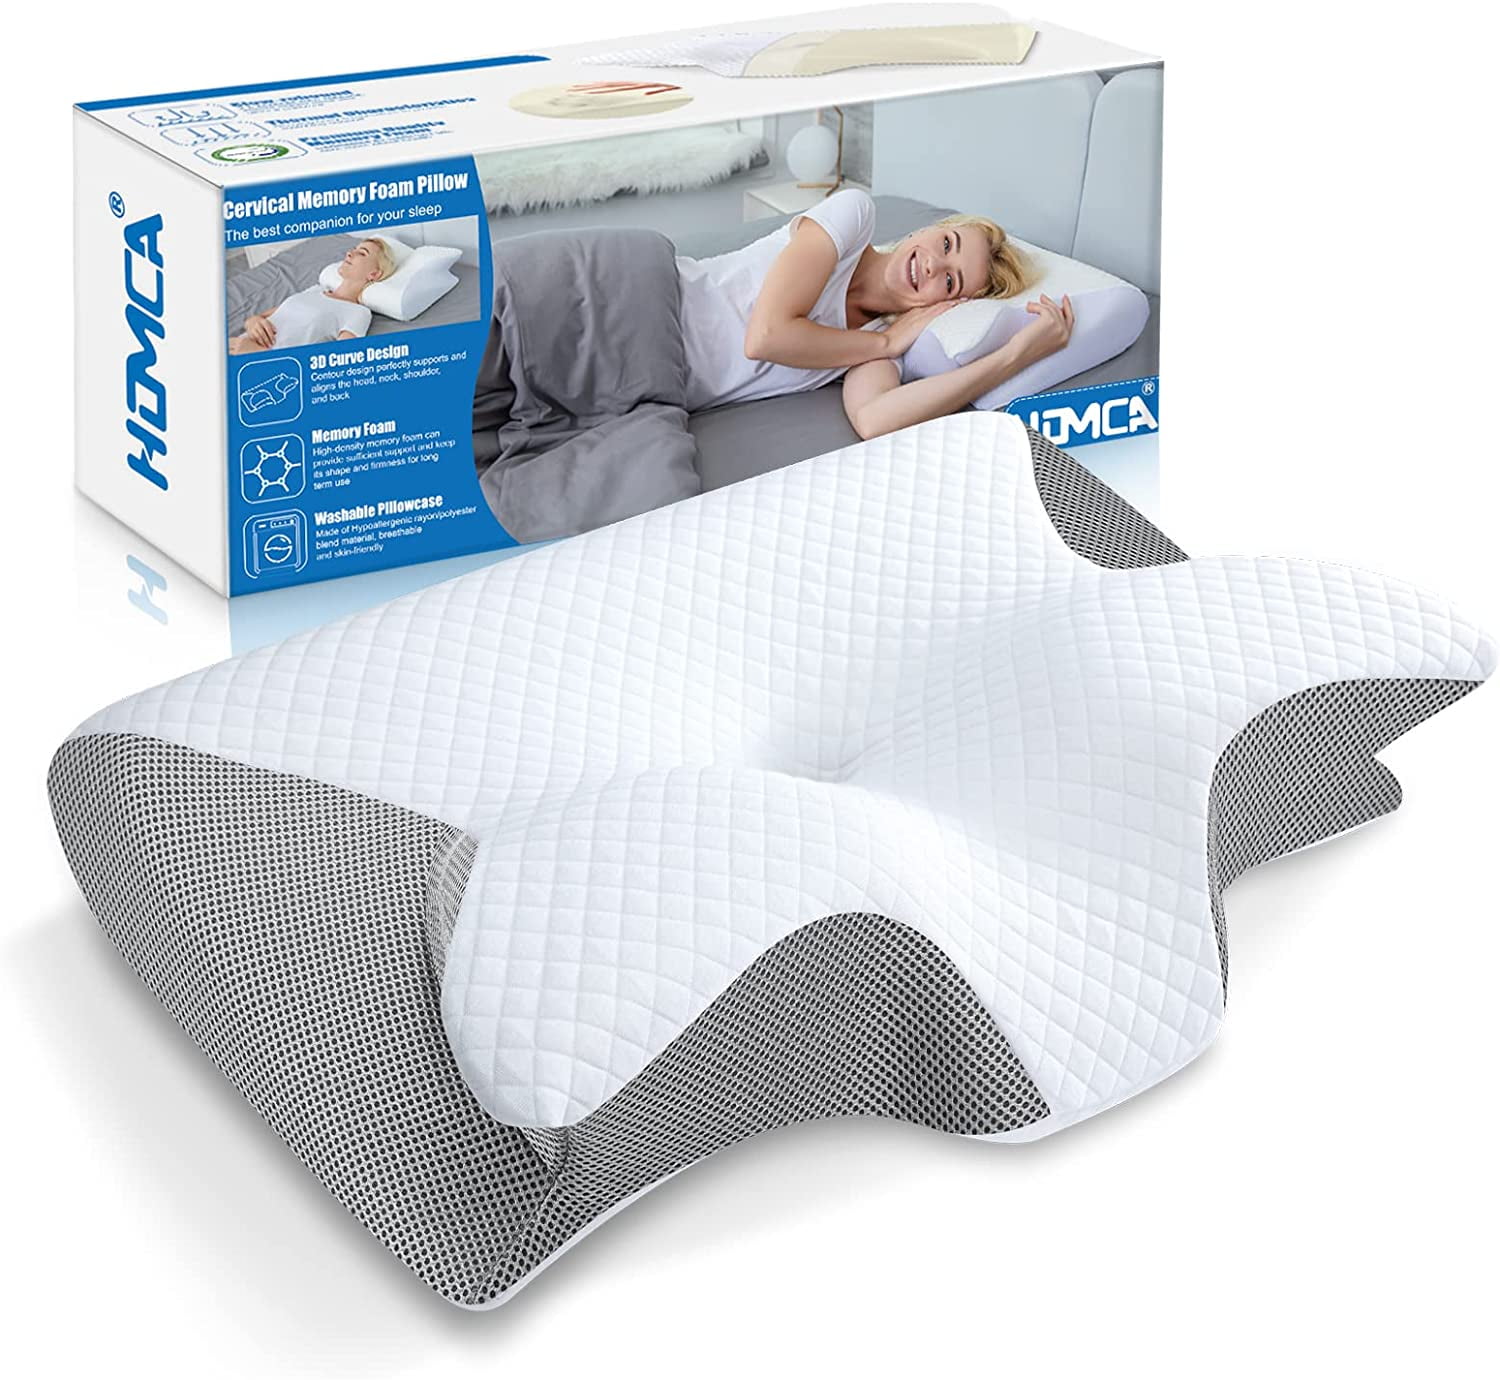 HOMCA Memory Foam Cervical Sleeping Pillow, 2 in 1 Ergonomic